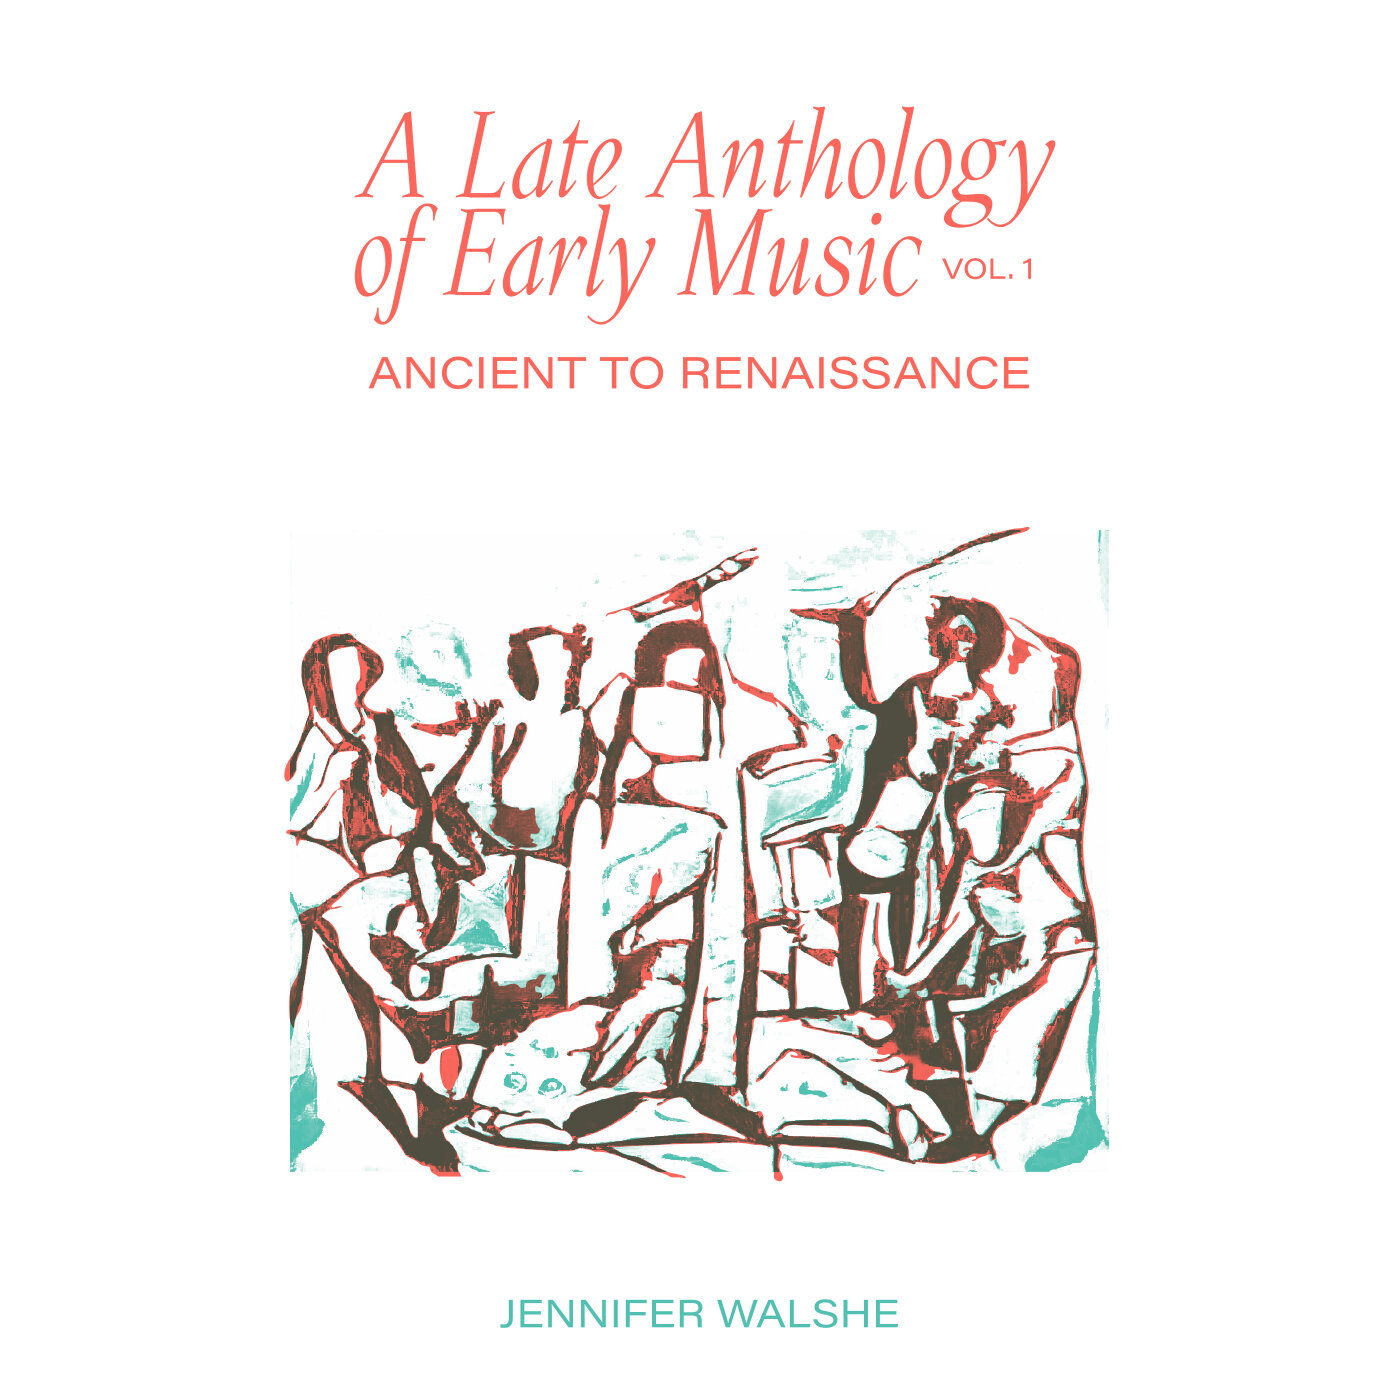 A Late Anthology J Walshe cover.jpg